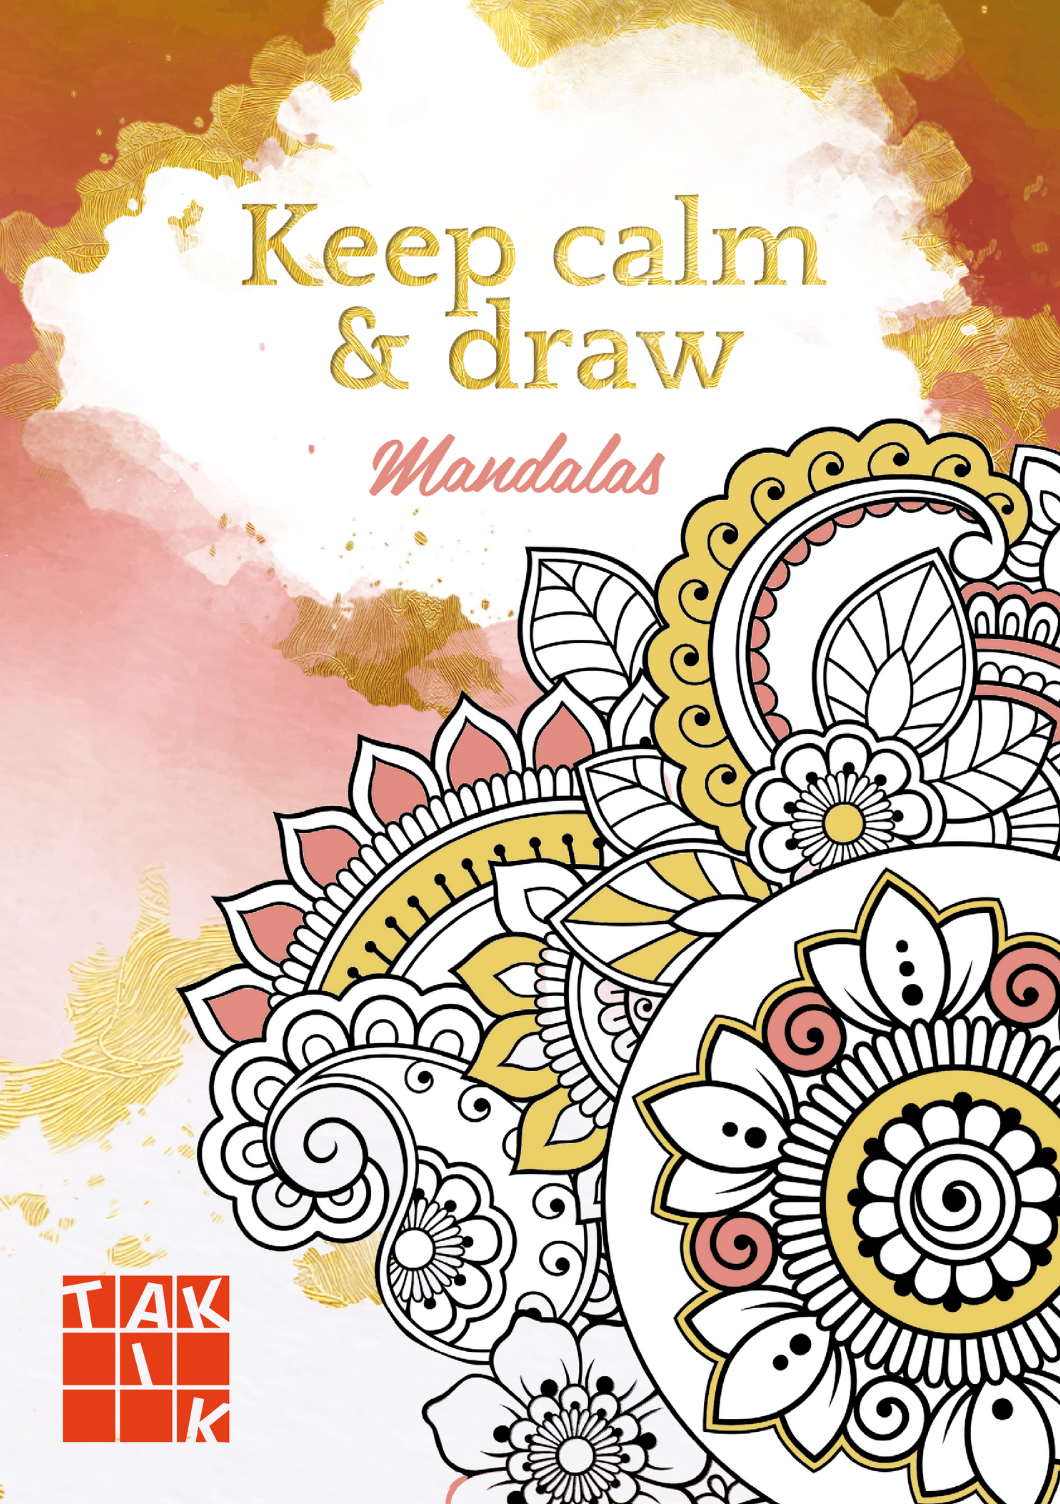 Keep calm & draw - Mandalas